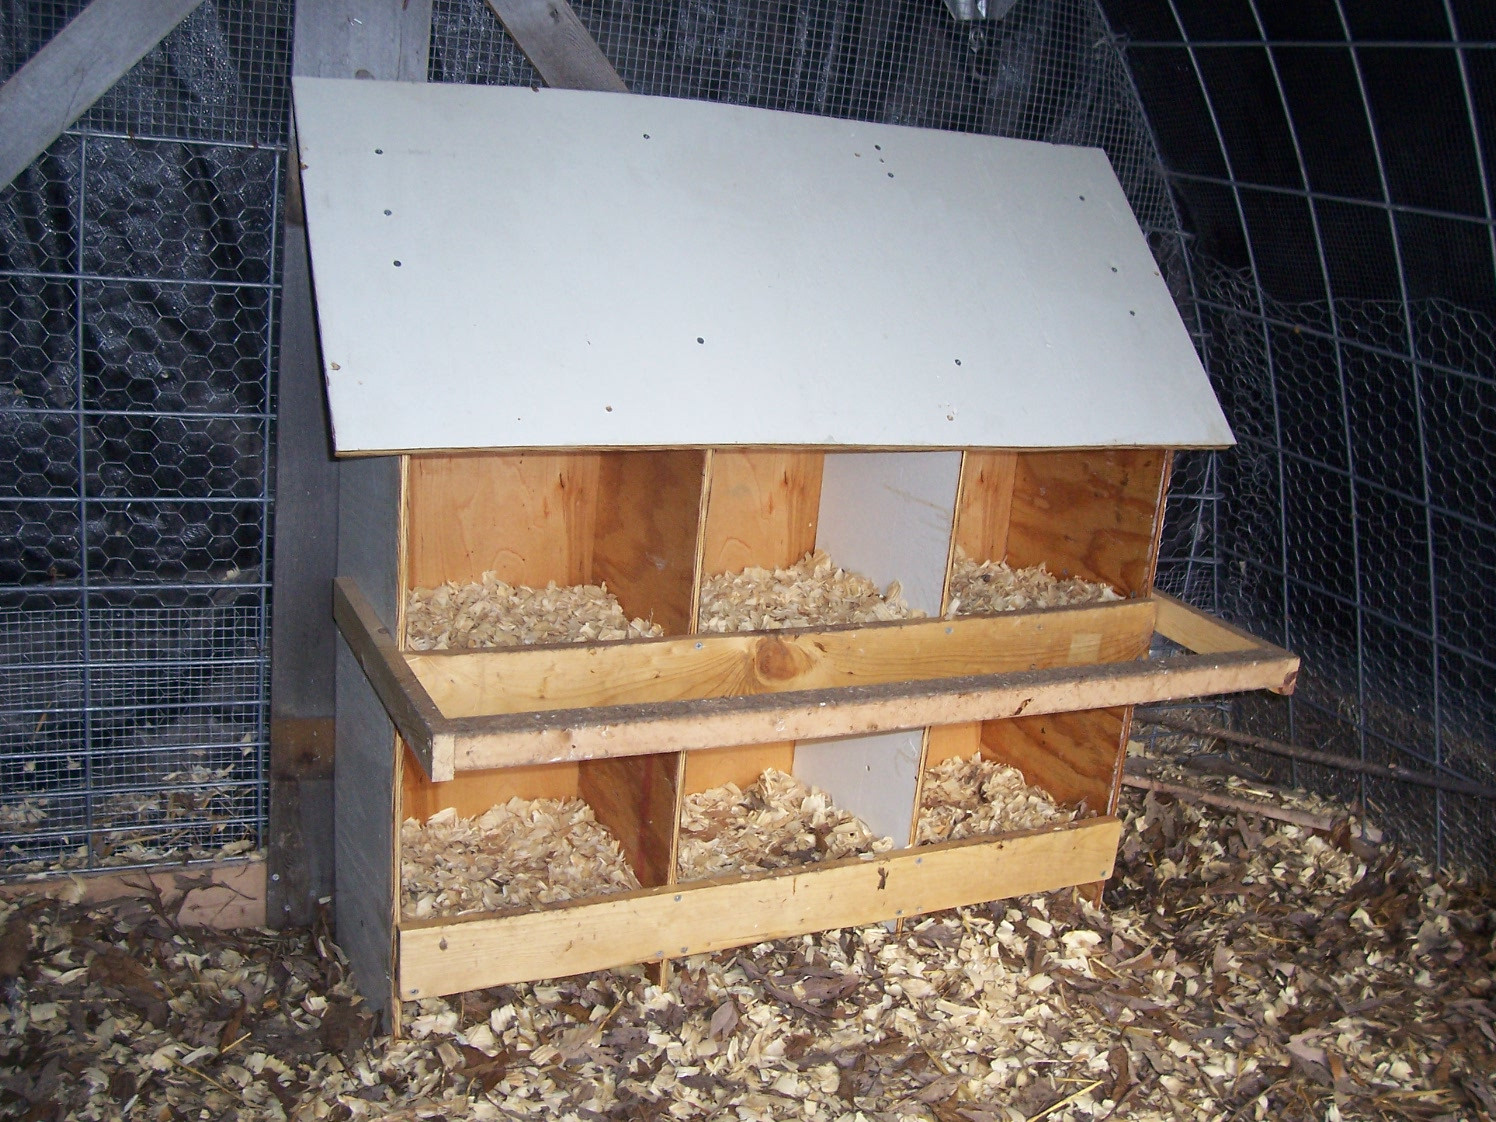 DIY Chicken Nest Box
 Joe s Garden Journal A Low cost easy to build chicken